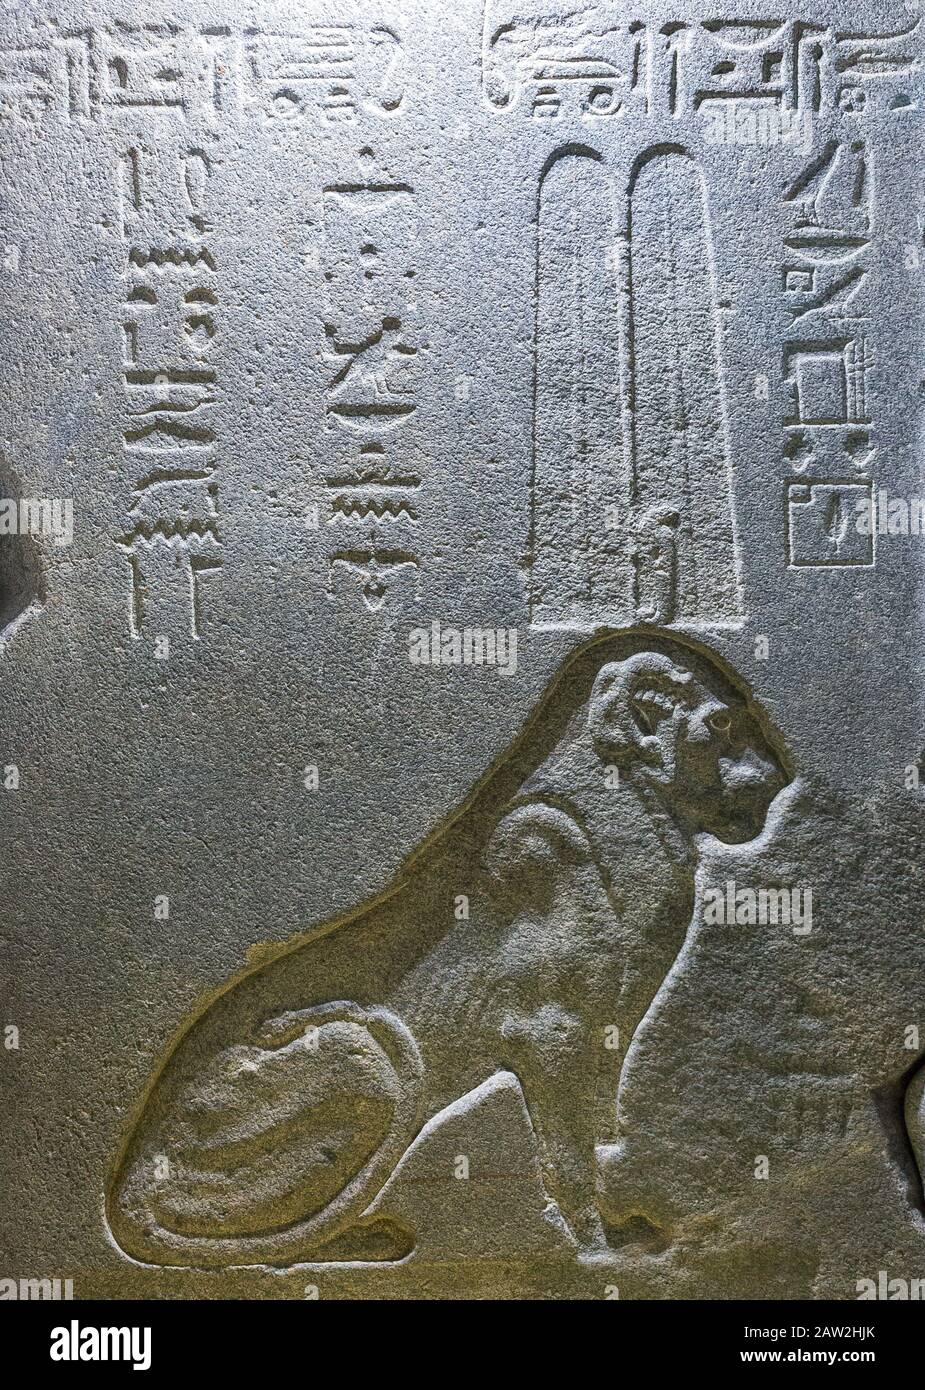 Photo taken during the opening visit of the exhibition “Osiris, Egypt's Sunken Mysteries”. Egypt, Alexandria, Graeco-Roman Museum, naos of the decades. Stock Photo